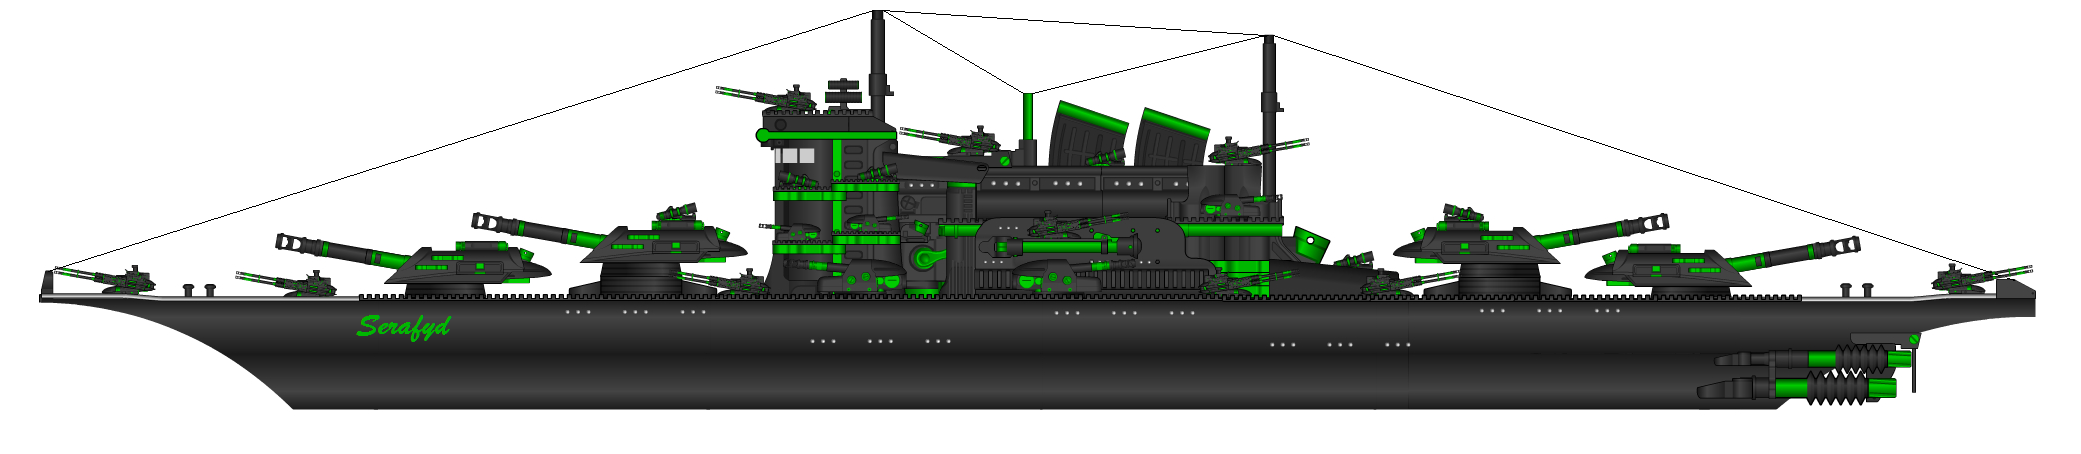 K.M. Serafyd Battleship